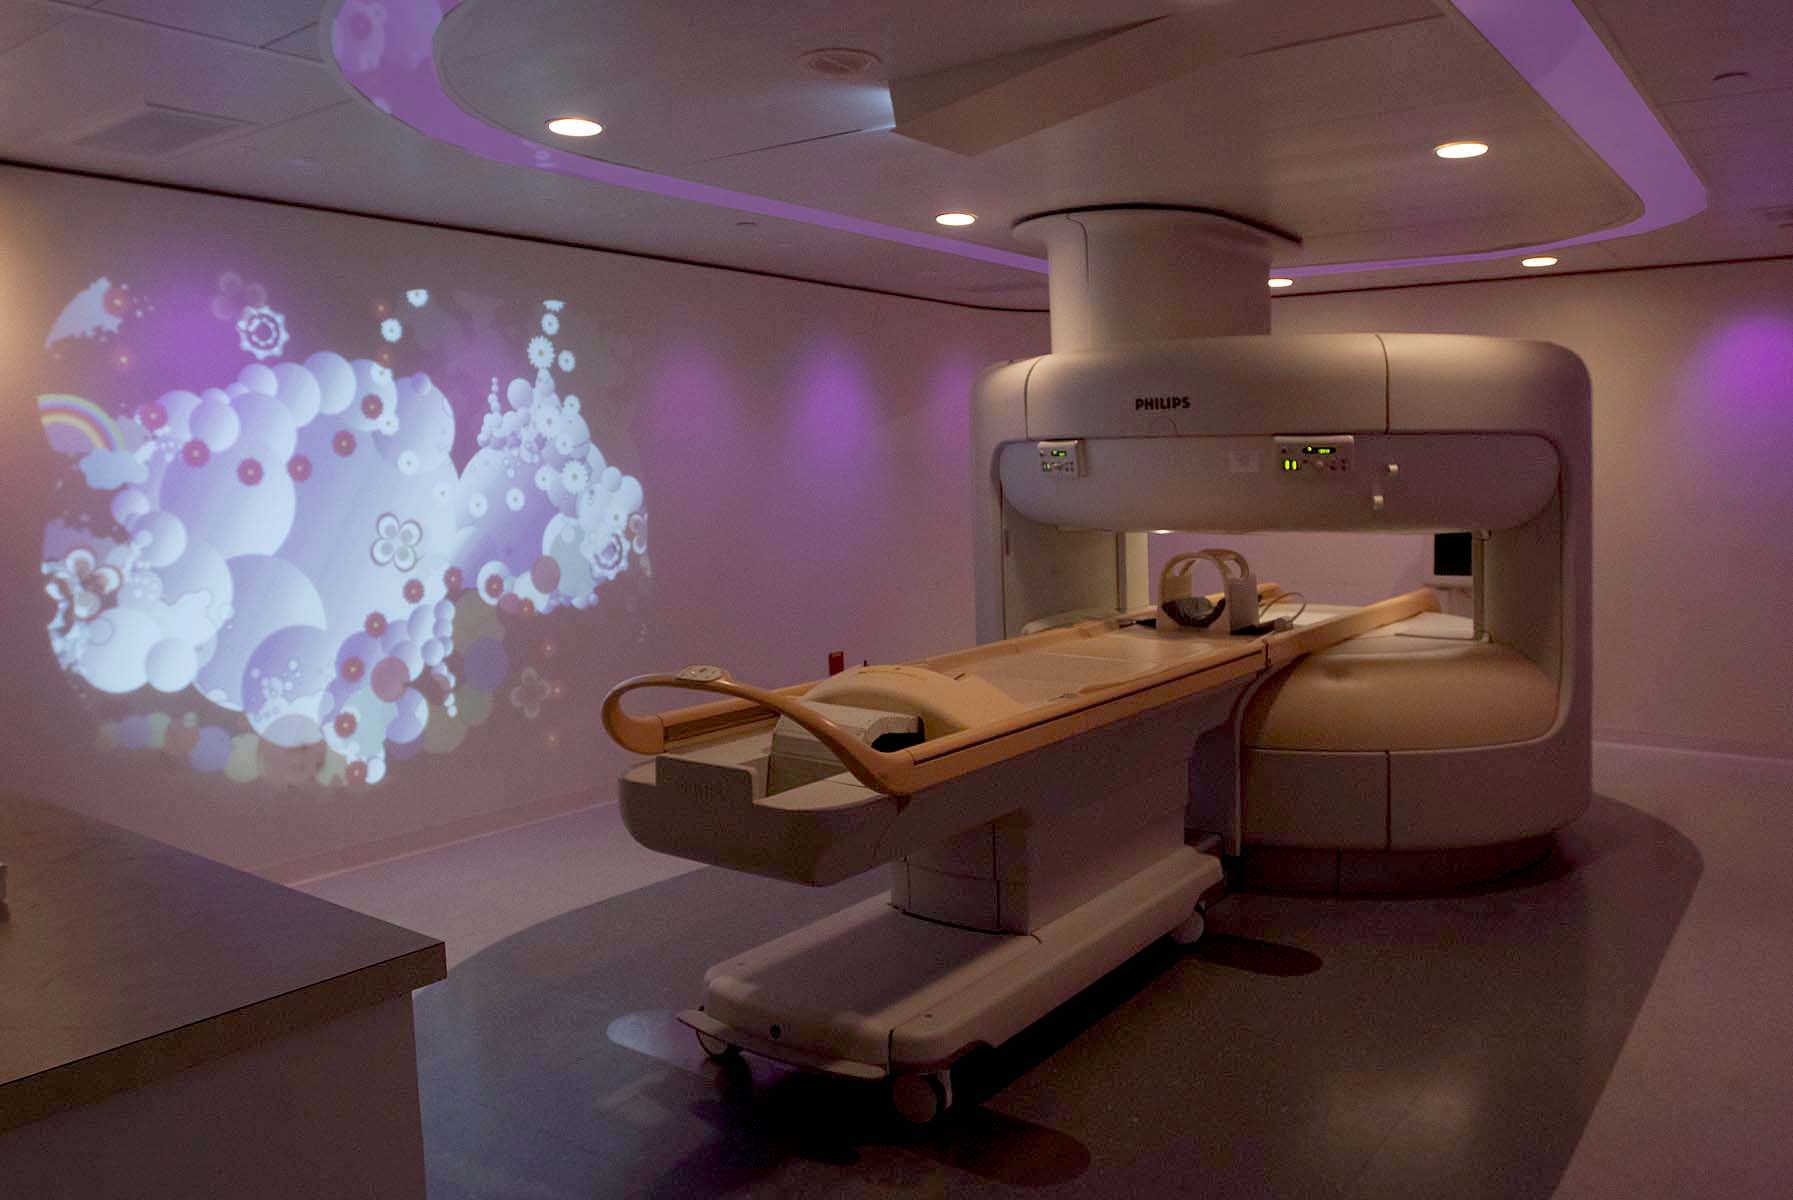 University of Vermont Medical Center 1.0T Open MRI 